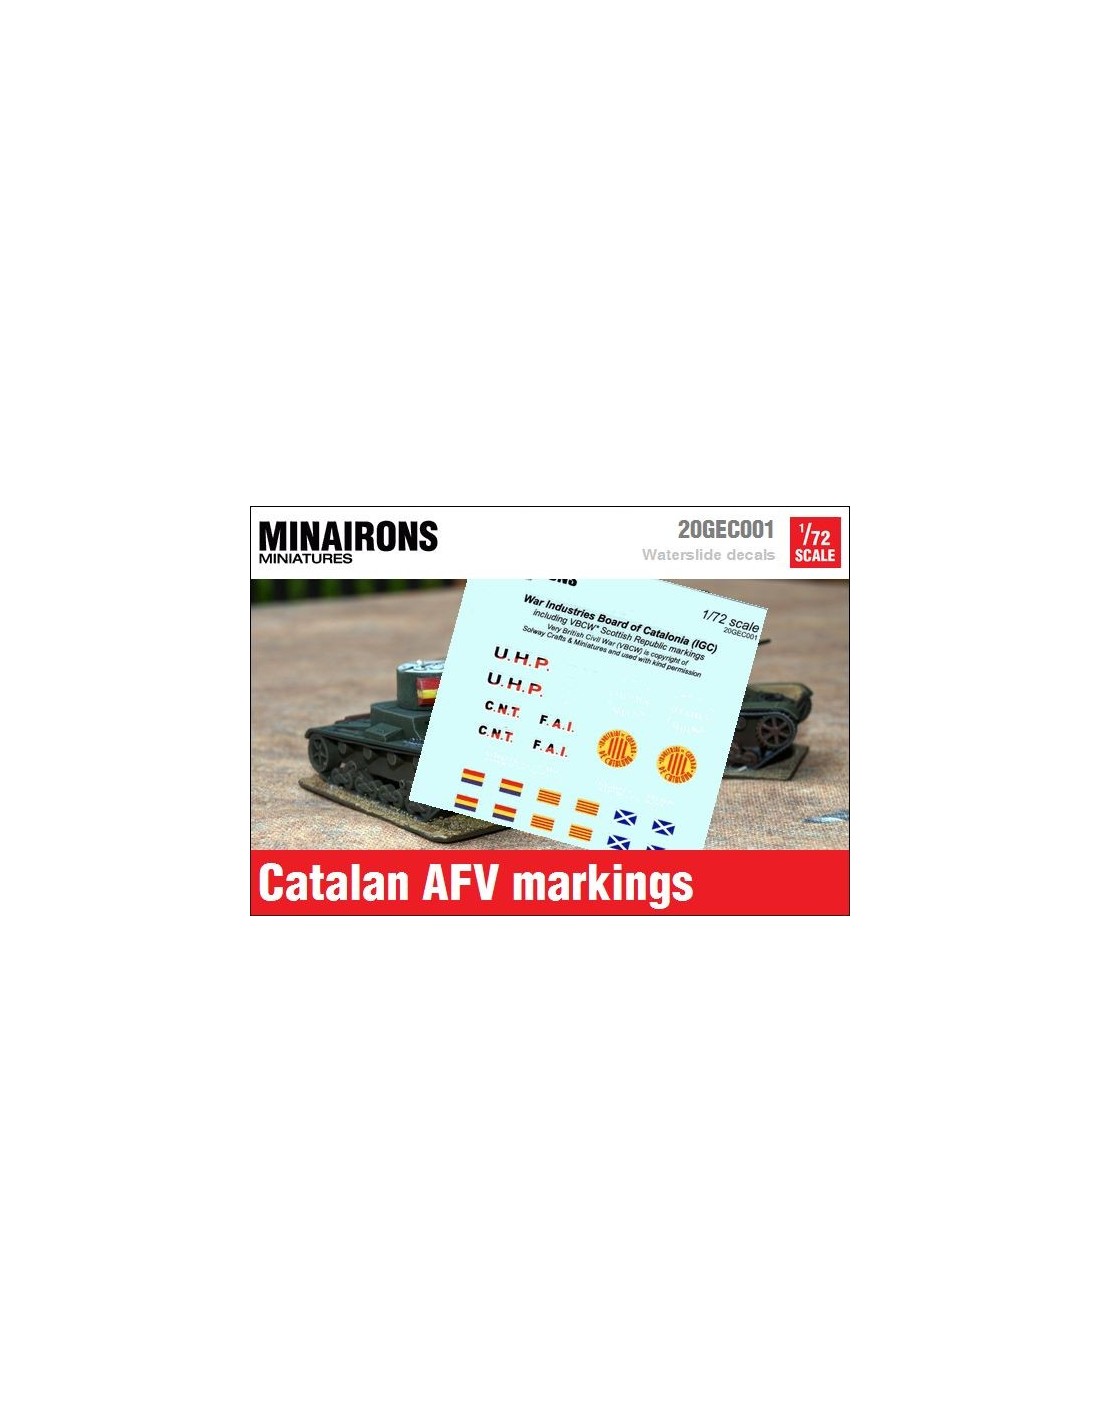 IGC Catalan Markings [MNA-20GEC001]